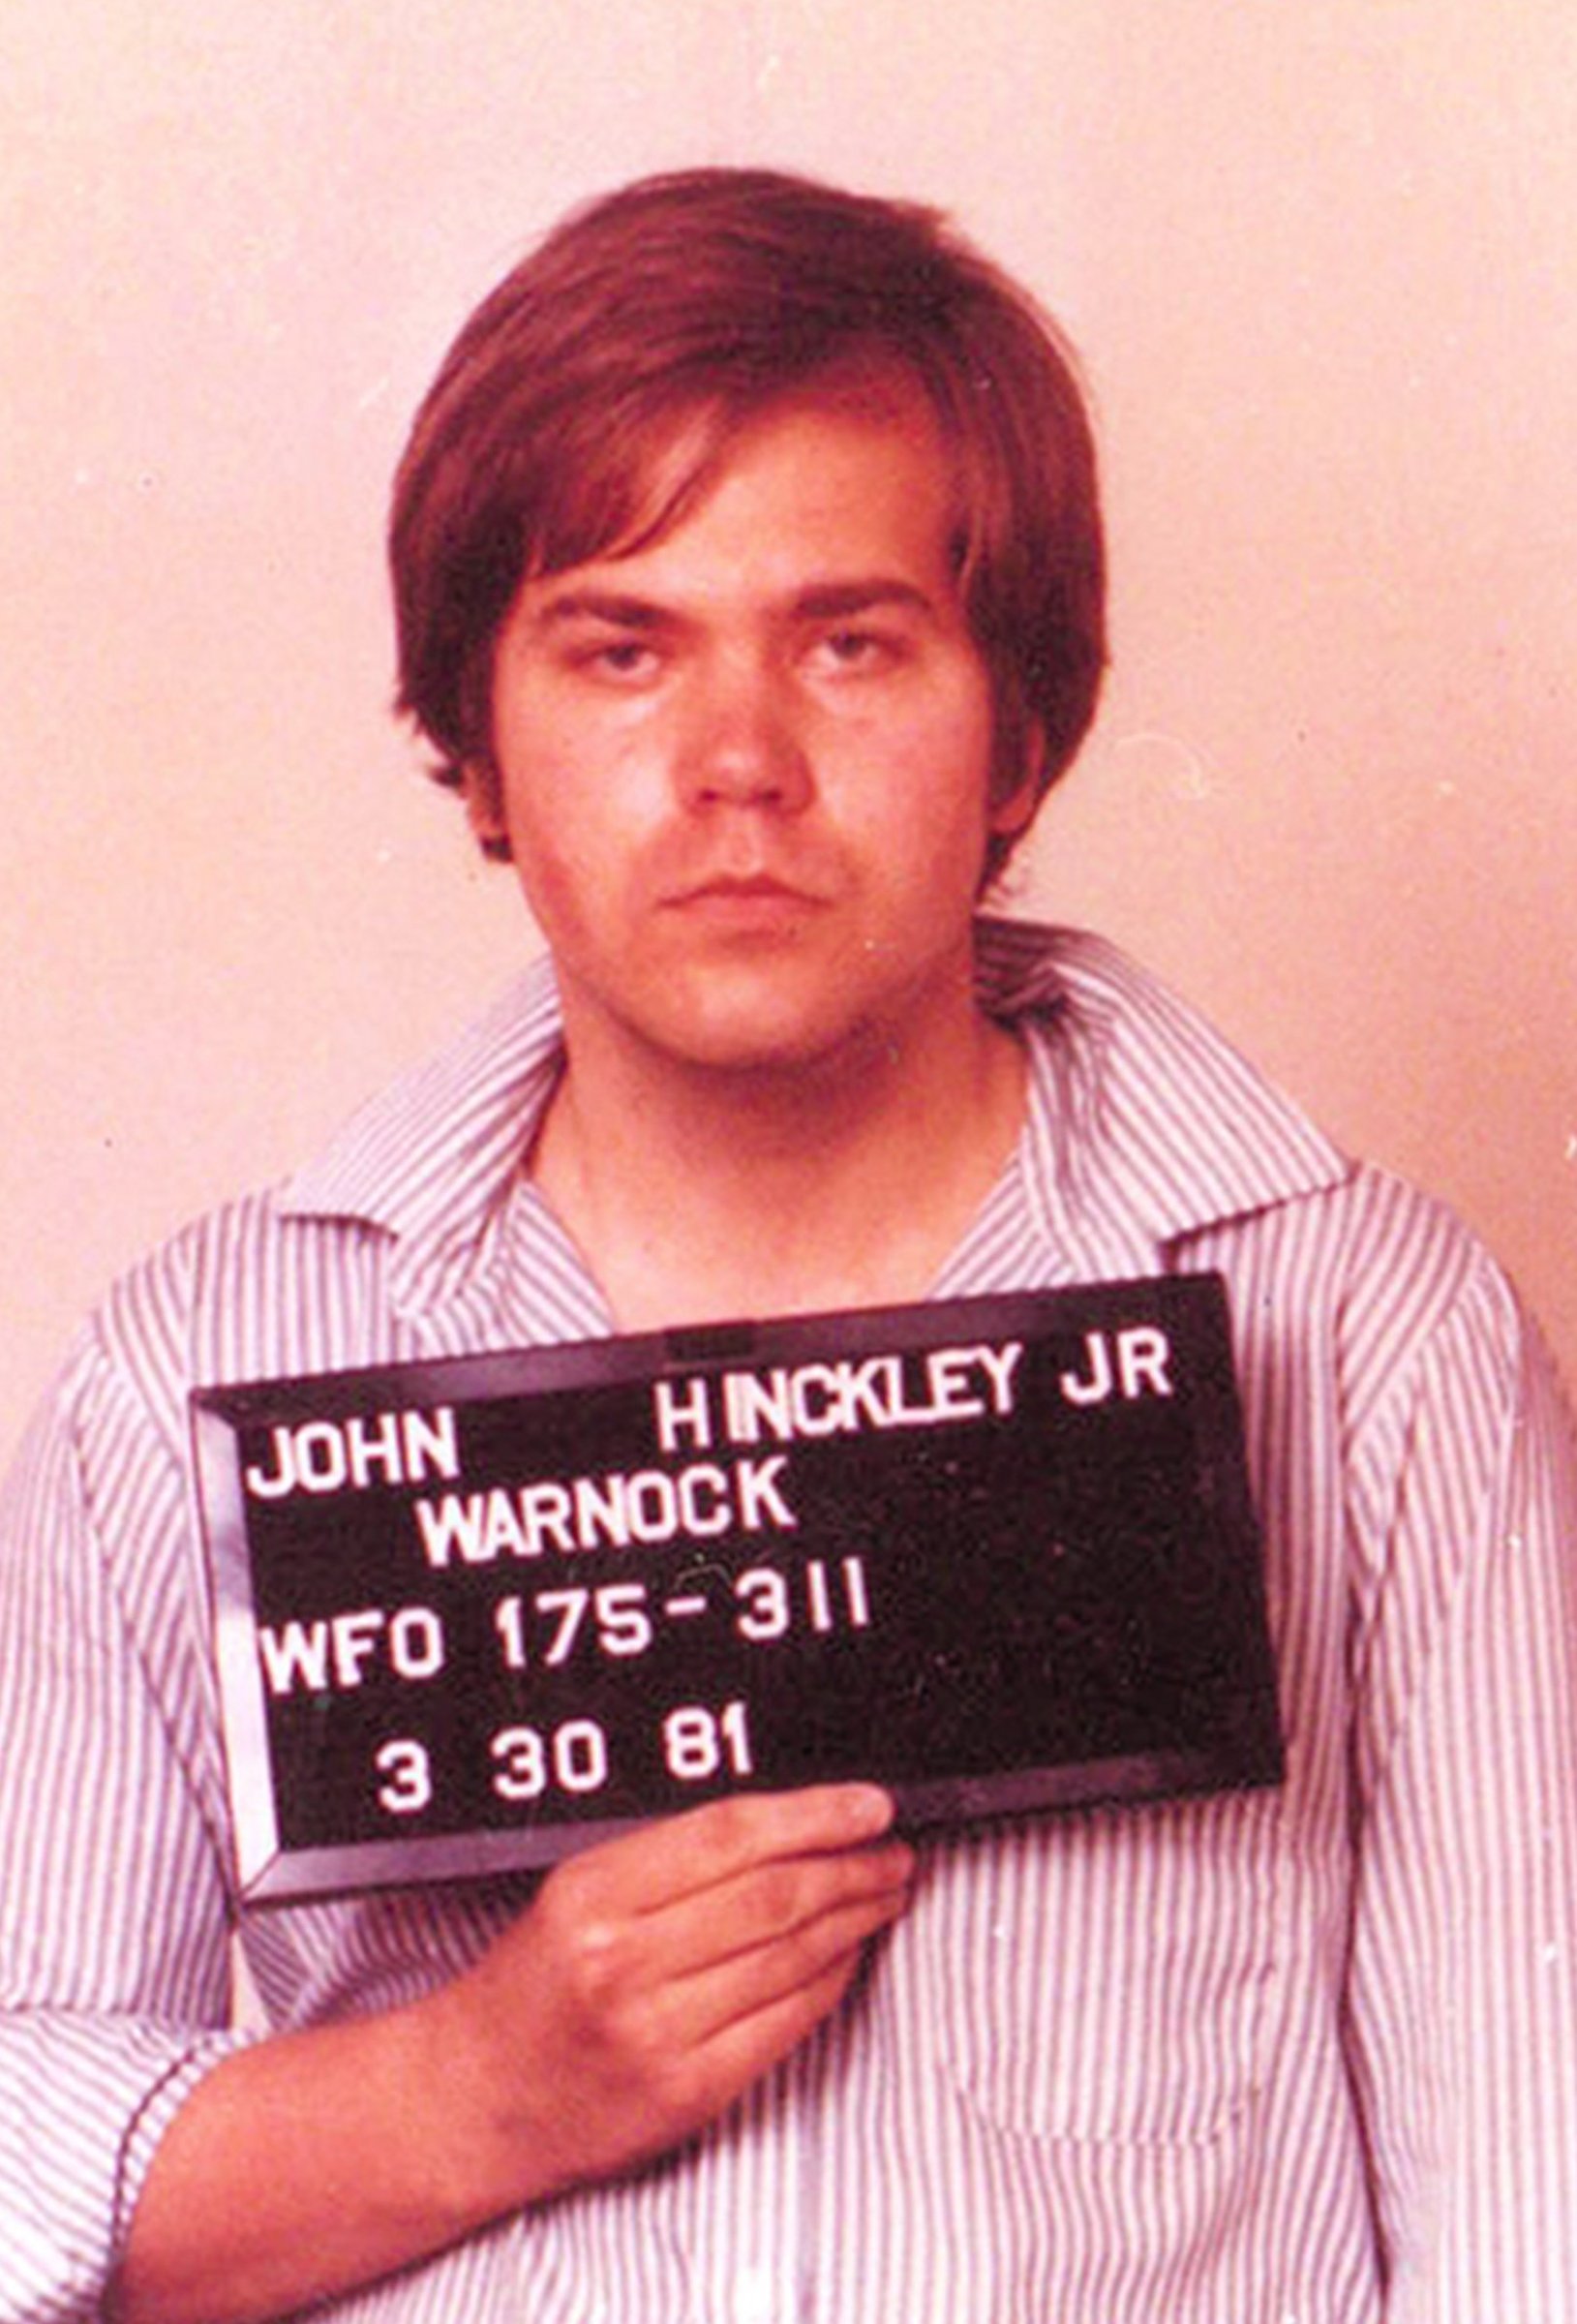 John Hinckley, Jr.